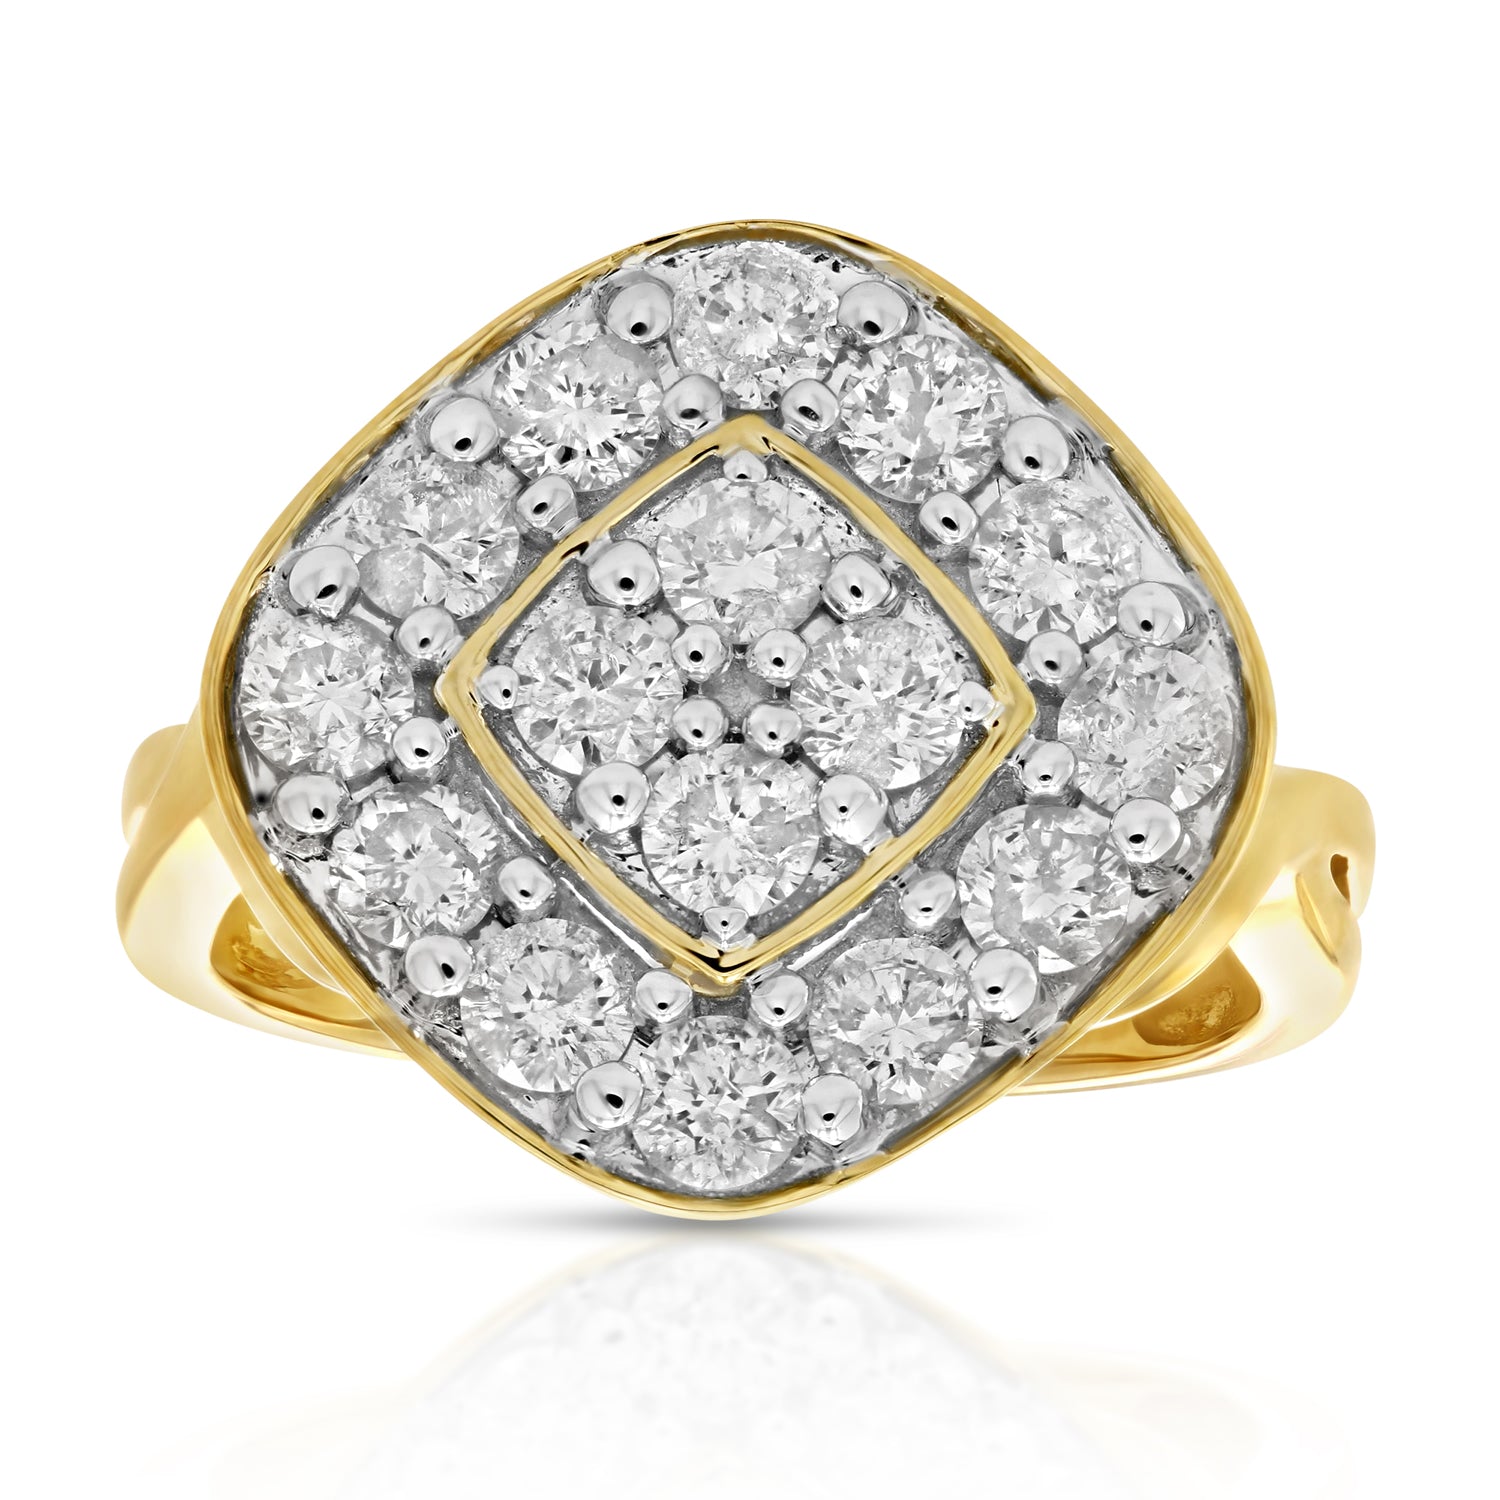 1.50 cttw Diamond Engagement Ring Cushion Style 14K Yellow Gold Bridal Wedding